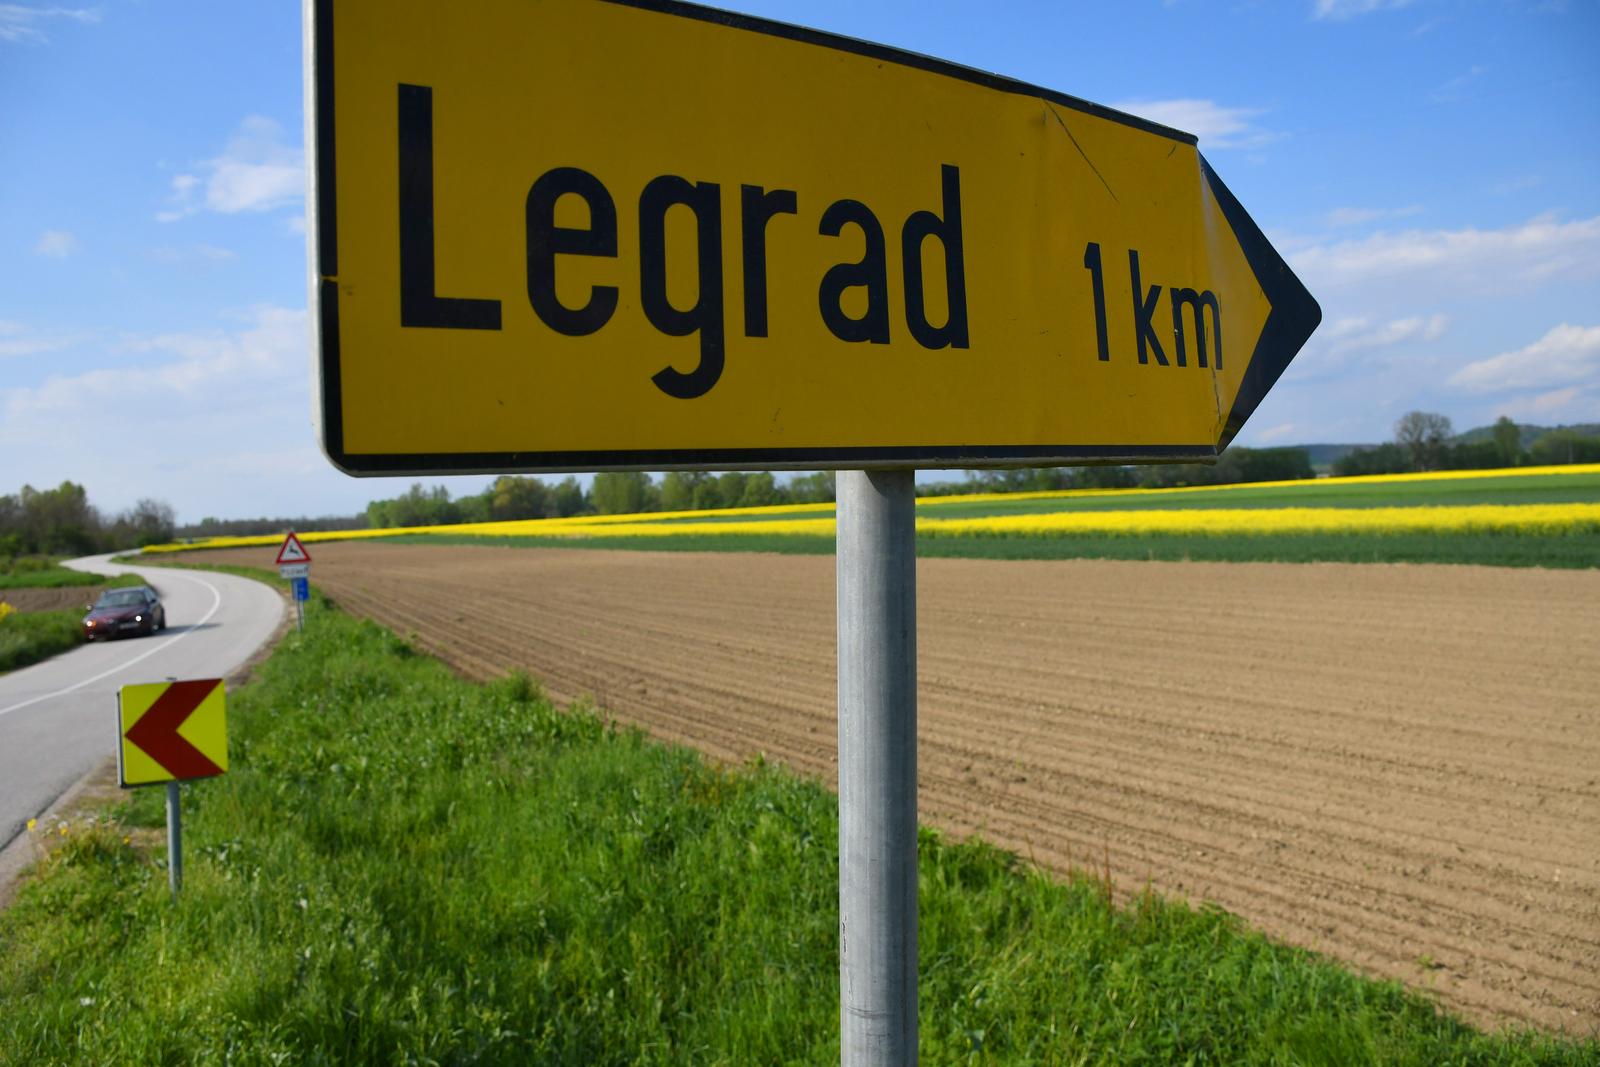 03.05.2021., Legrad - Turisticka patrola Vecernjeg lista. Legrad. "nPhoto:Damir Spehar/PIXSELL